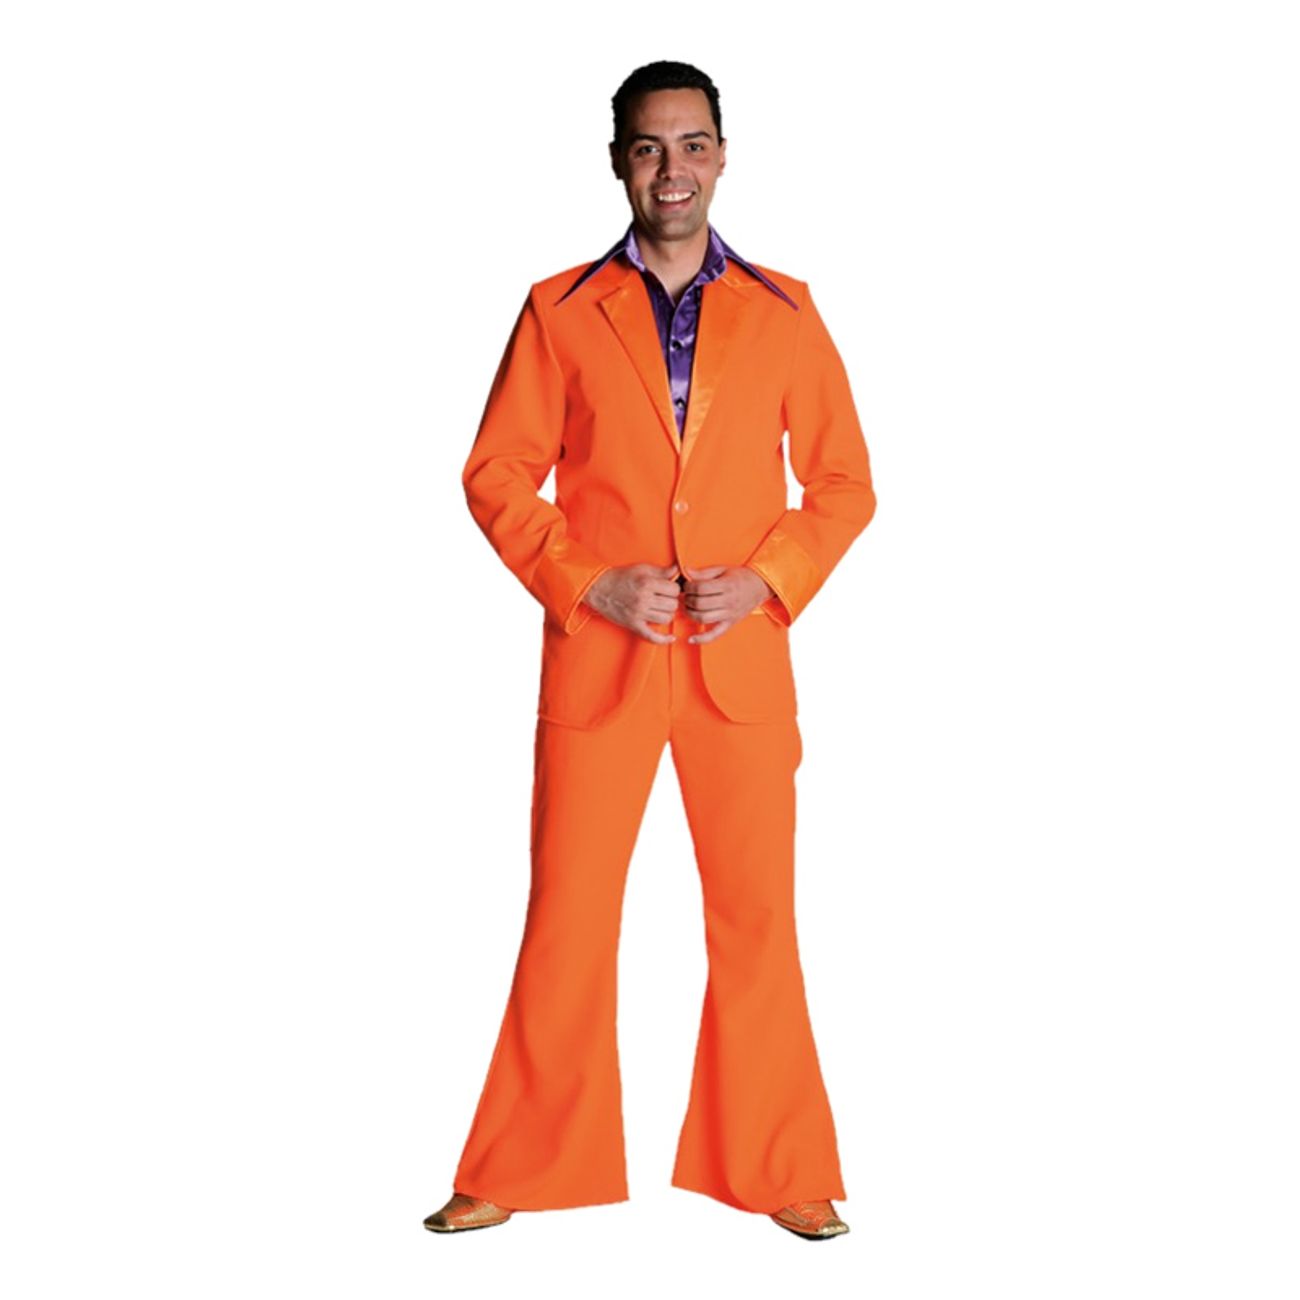 70-tals-kostym-orange-maskeraddrakt-1